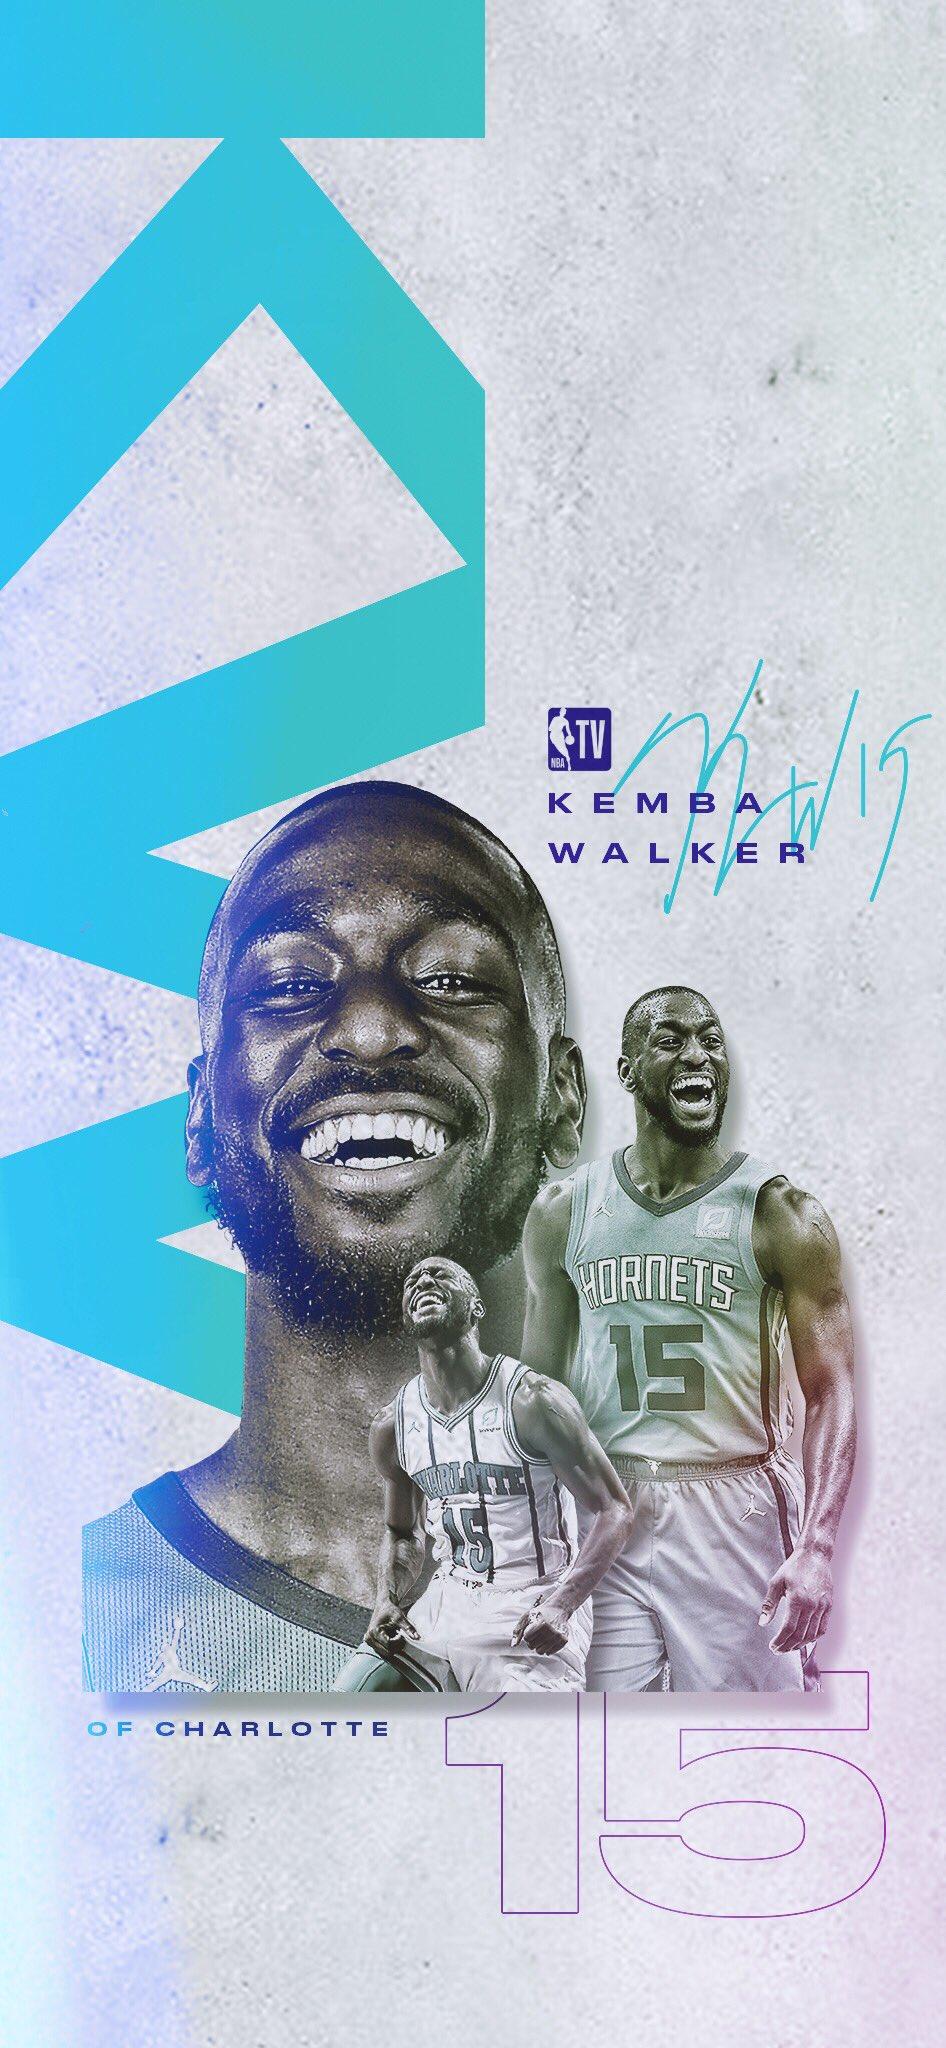 New Kemba Walker wallpaper courtesy of NBA TV